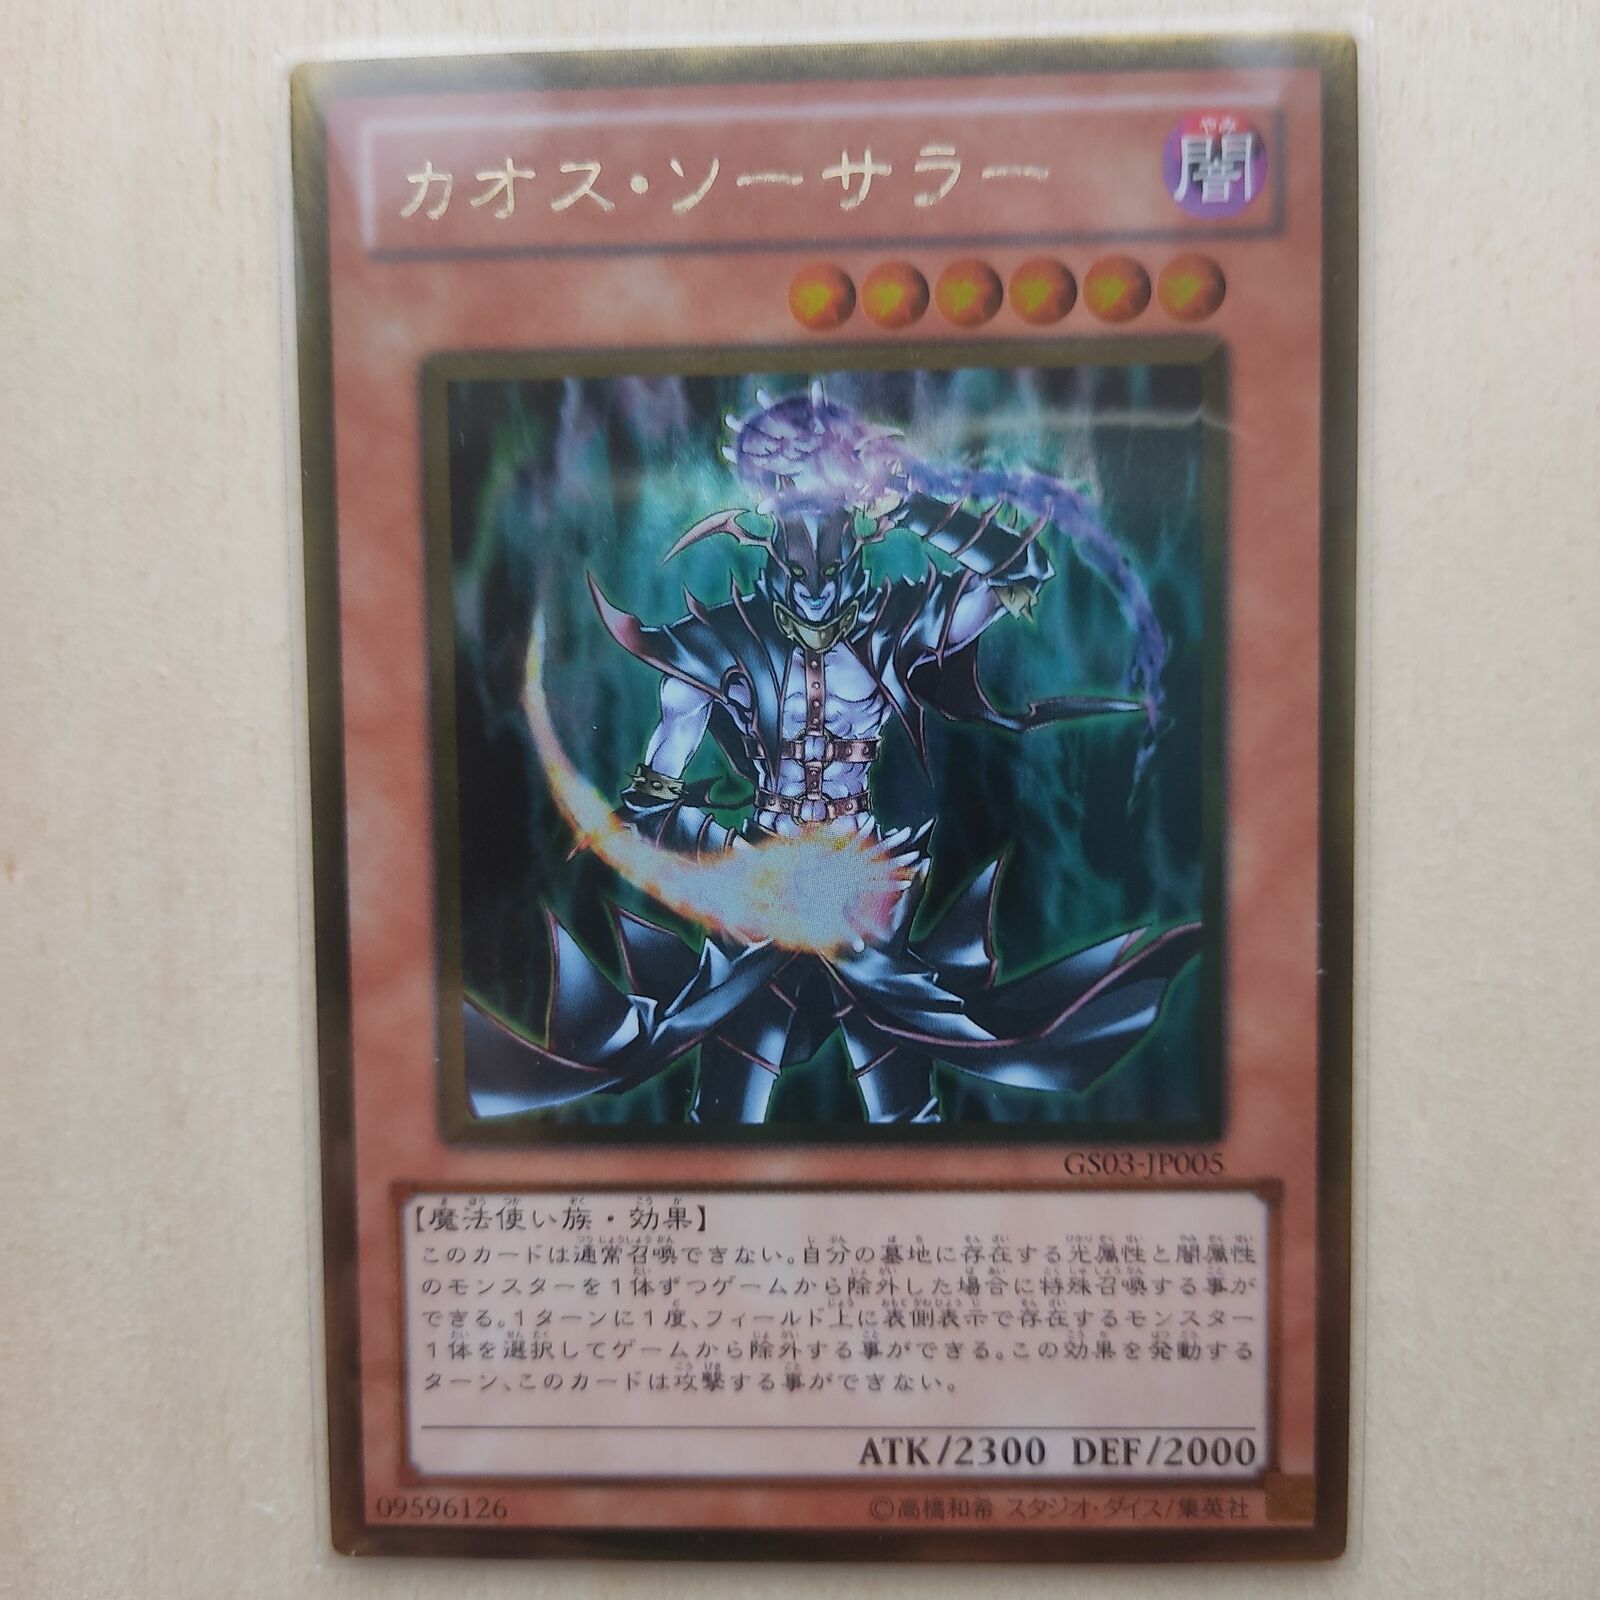 Yu-Gi-Oh - Chaos Wizard - Chaos Sorcerer - GS03 - 005 - Gold - Japanese